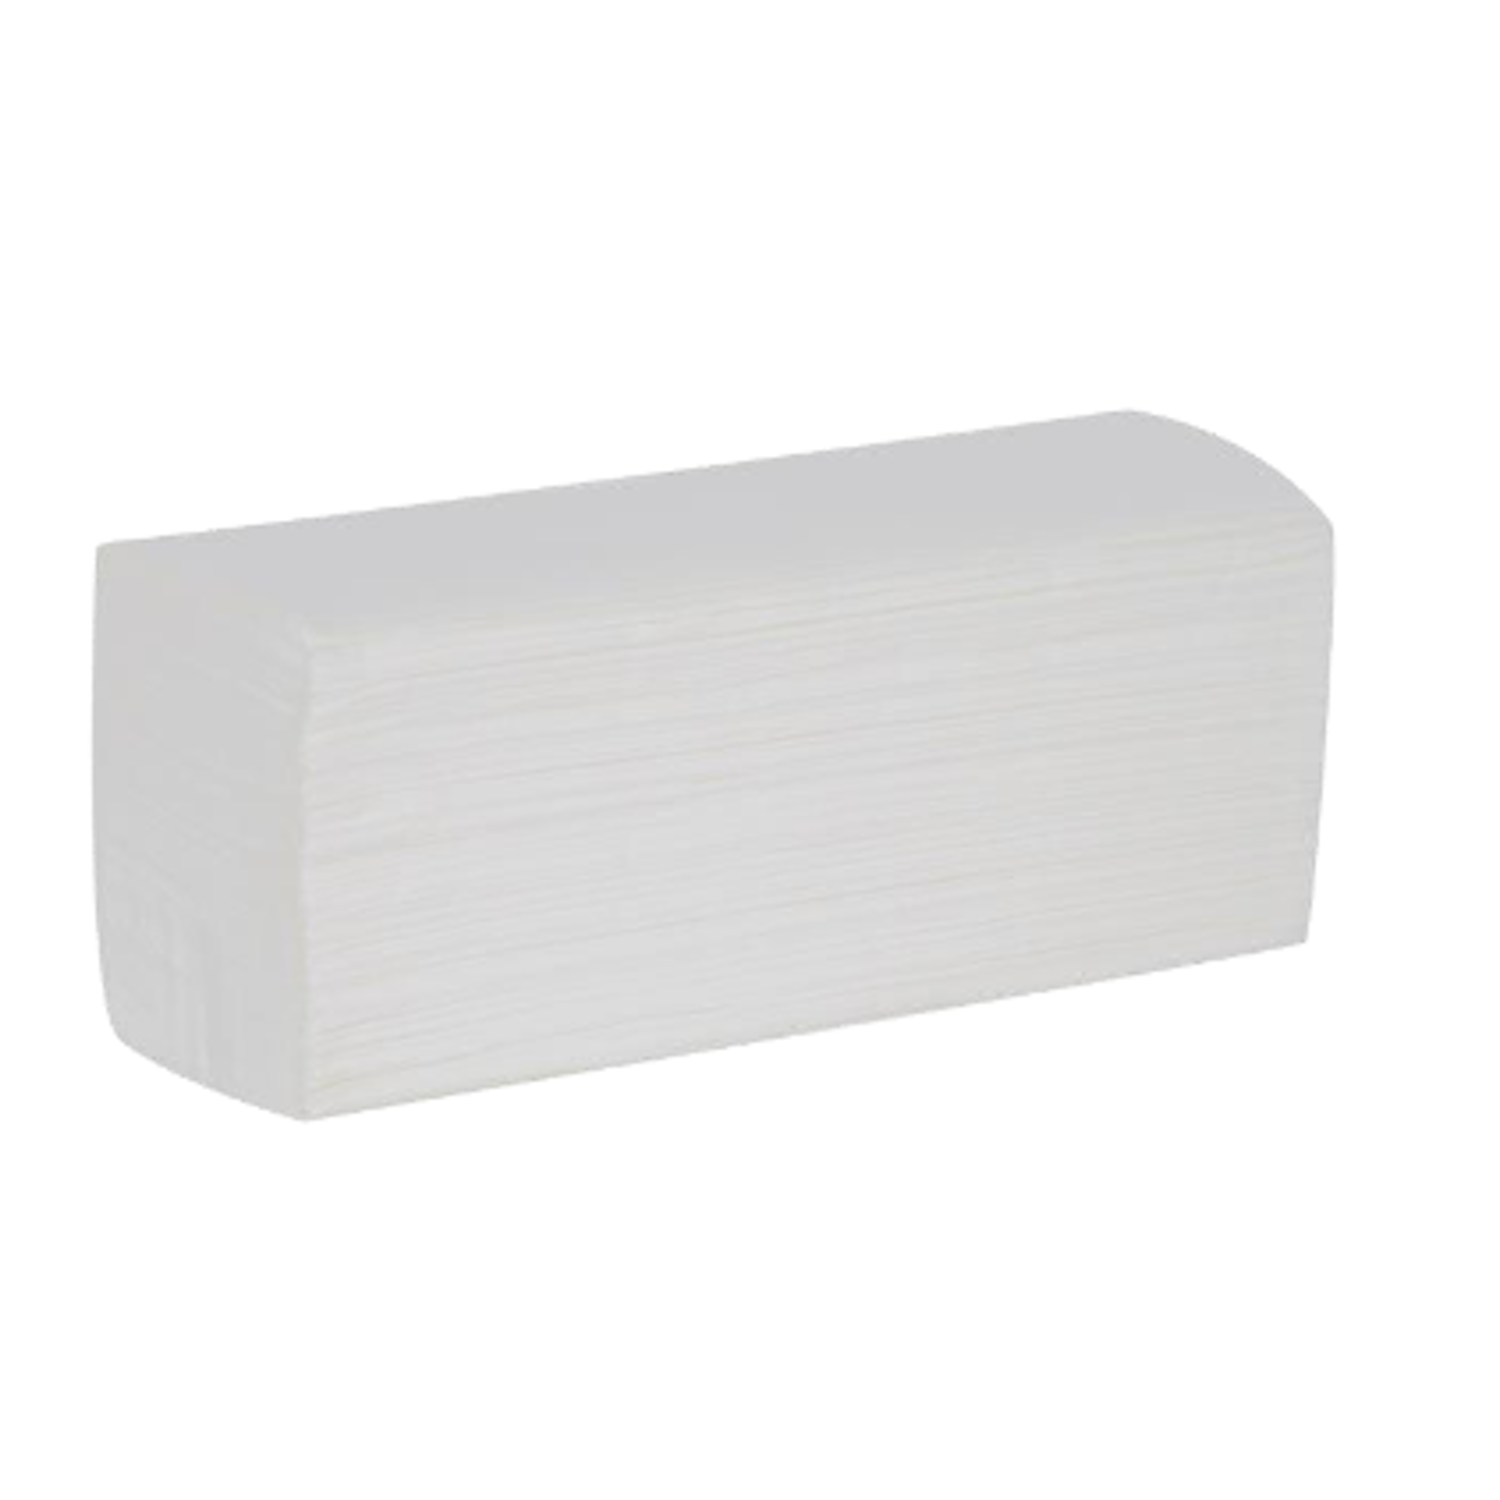 Z-Fold White Hand Towel 3000